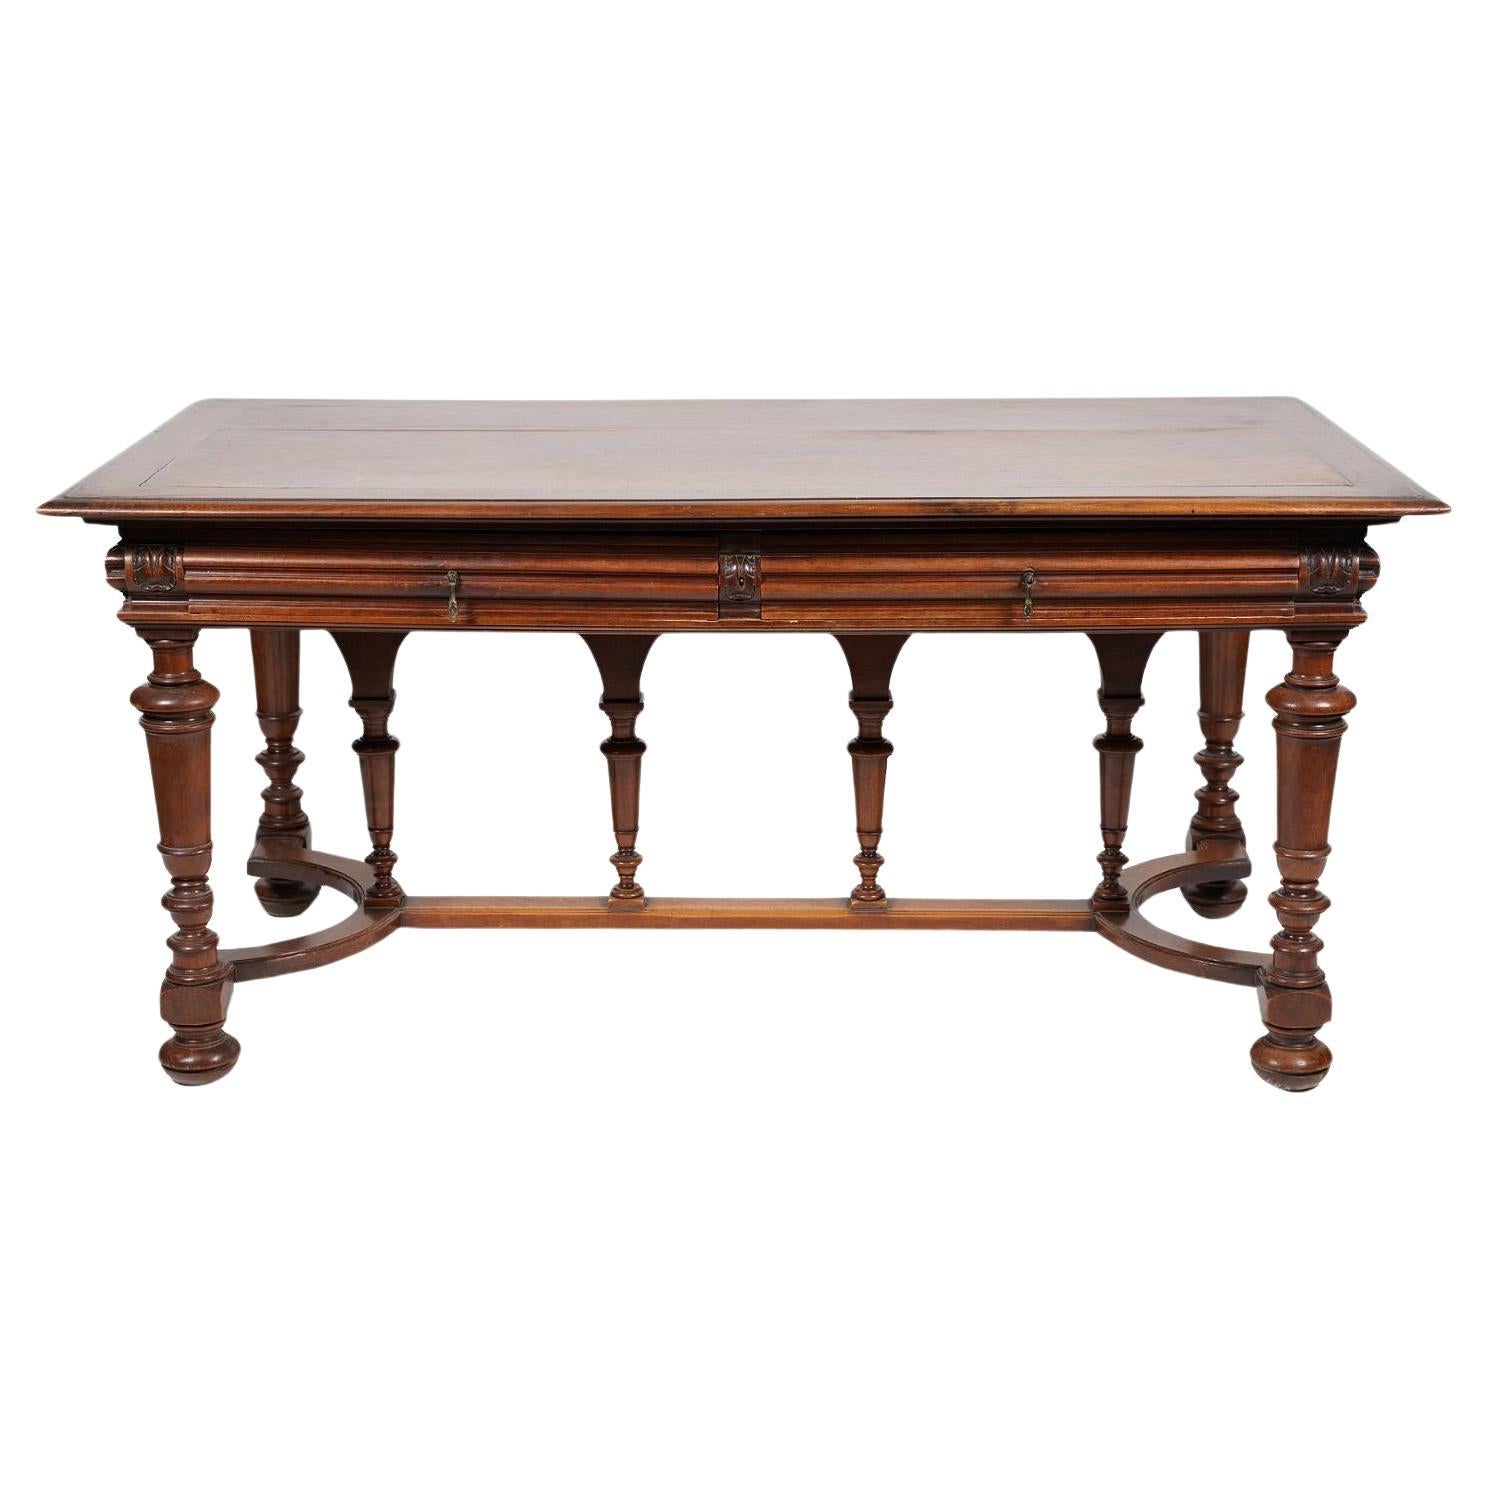 Antique American Renaissance Revival Walnut Library Table Desk Mid 19th Century